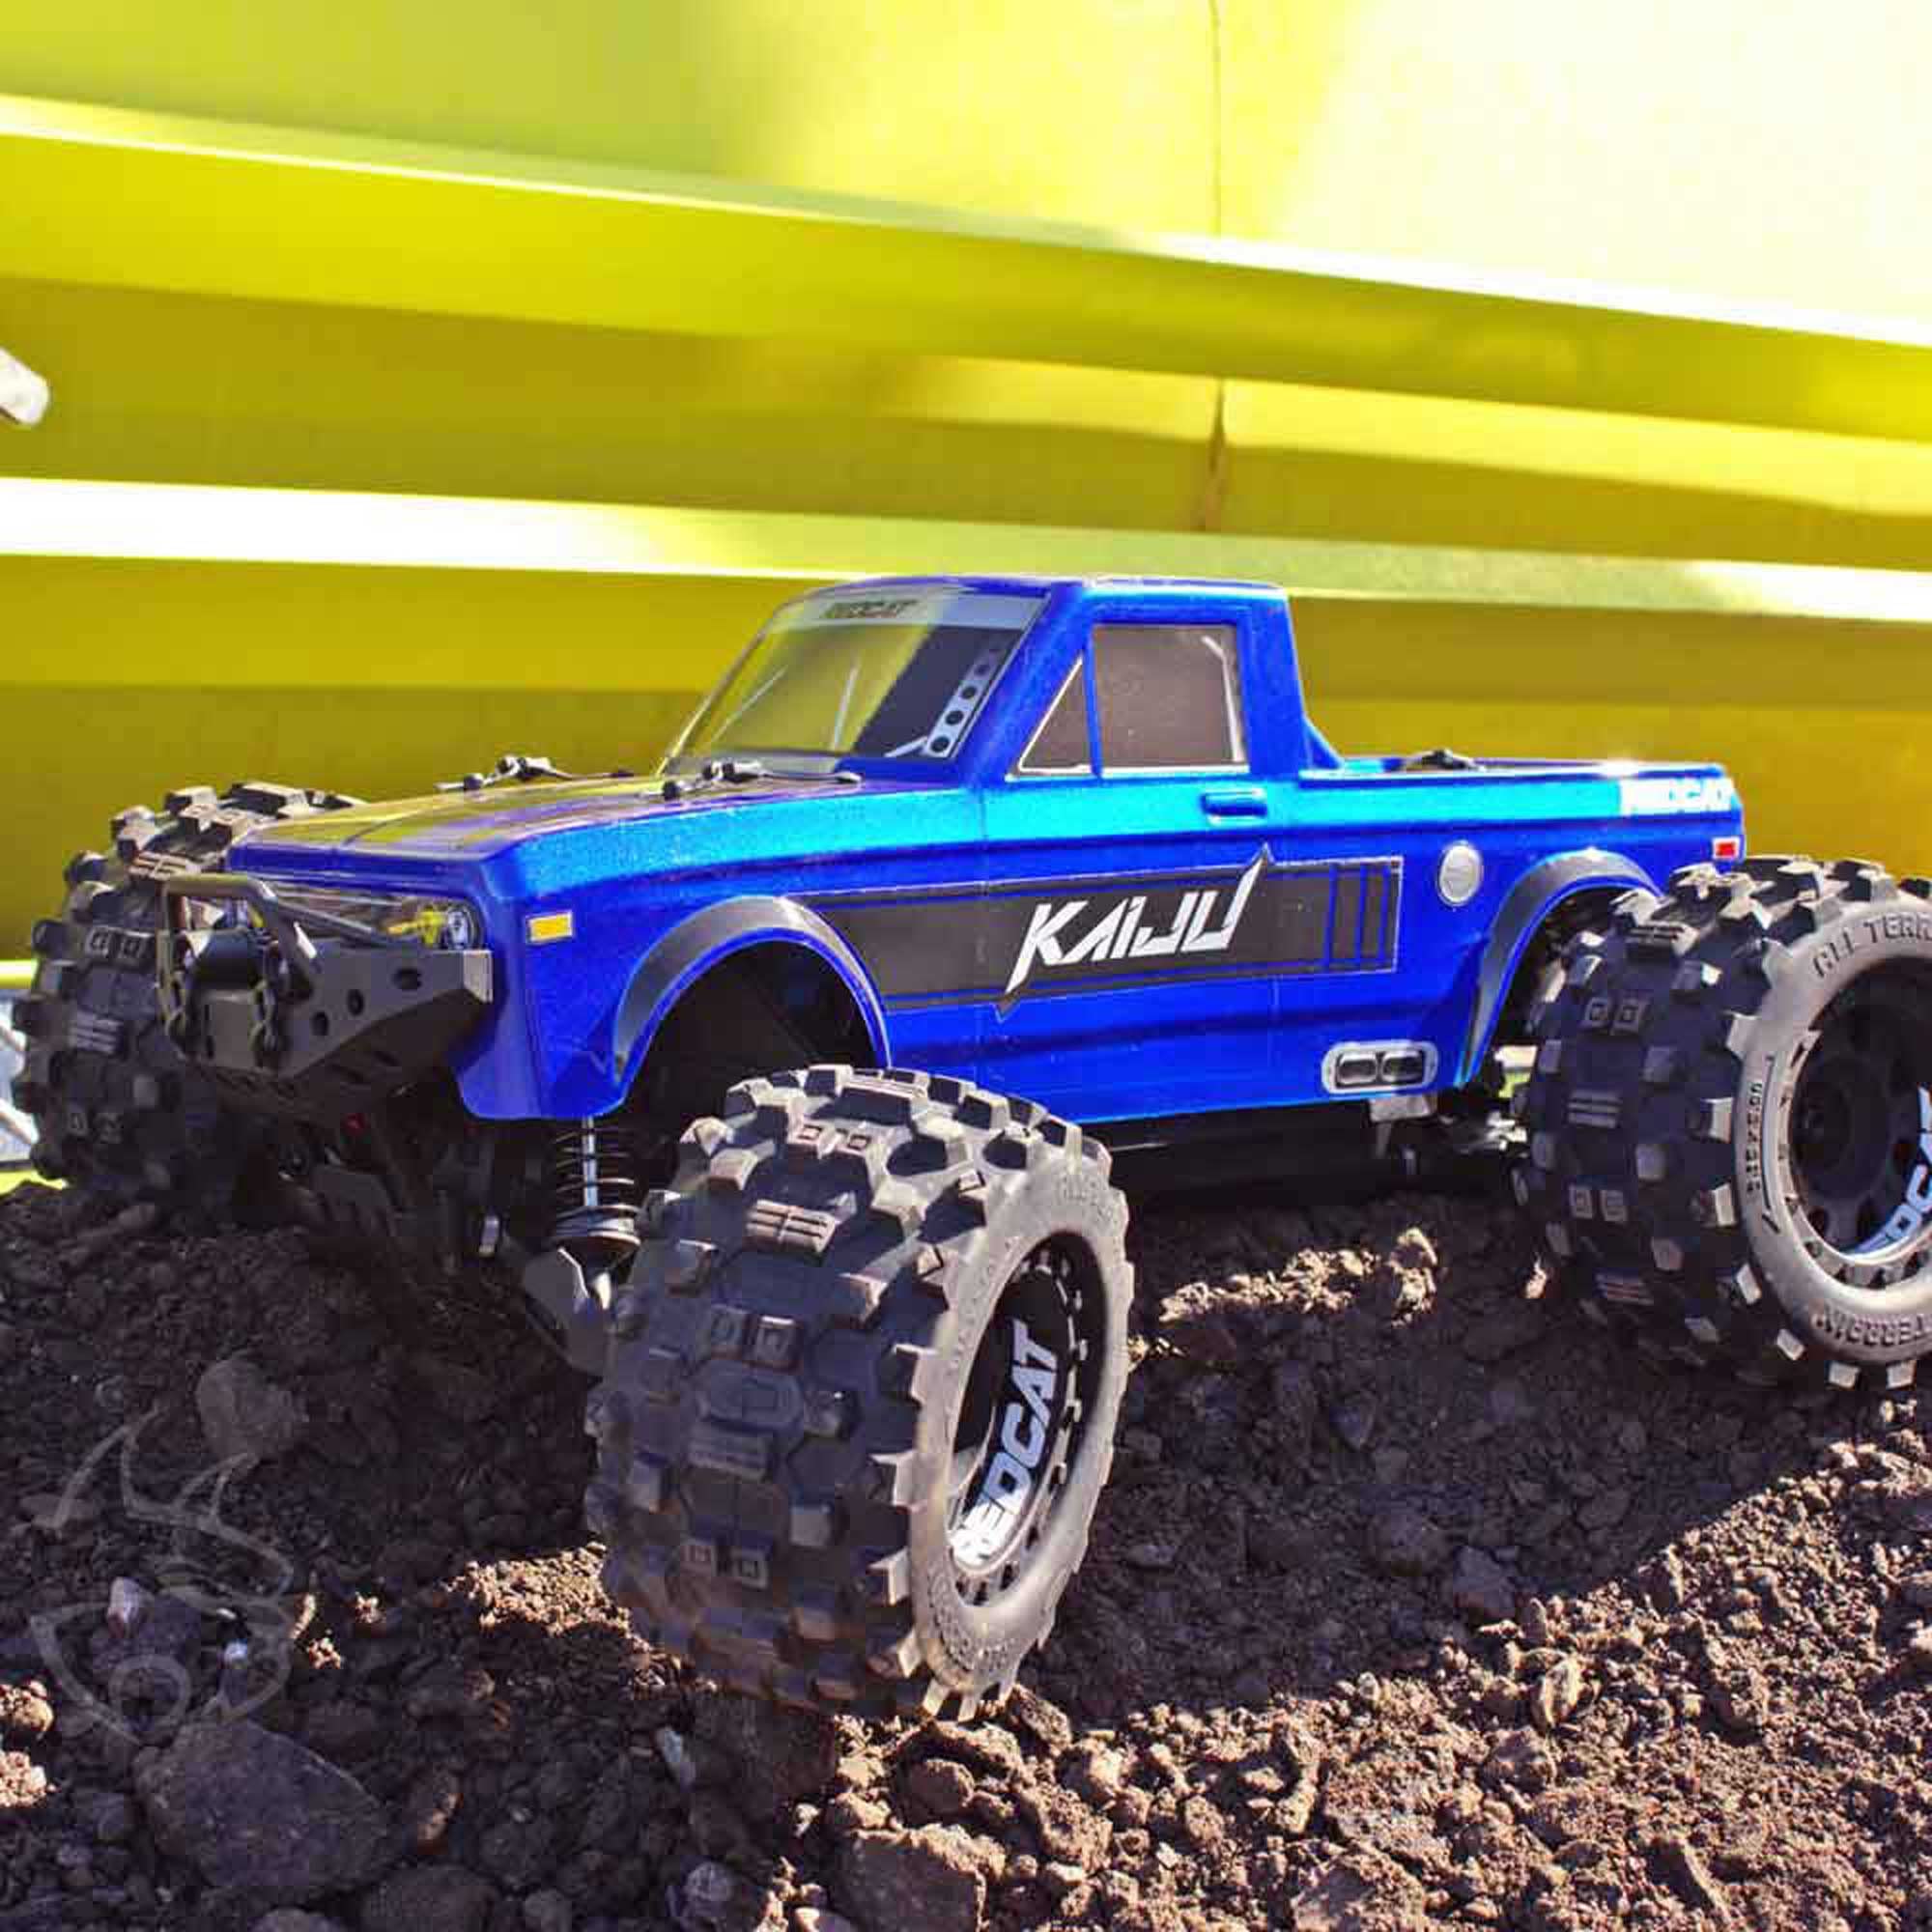 Redcat Racing Kaiju - 1:8 Scale Monster Truck – RTR- 6S Ready, Blue (Kaiju-Blue)